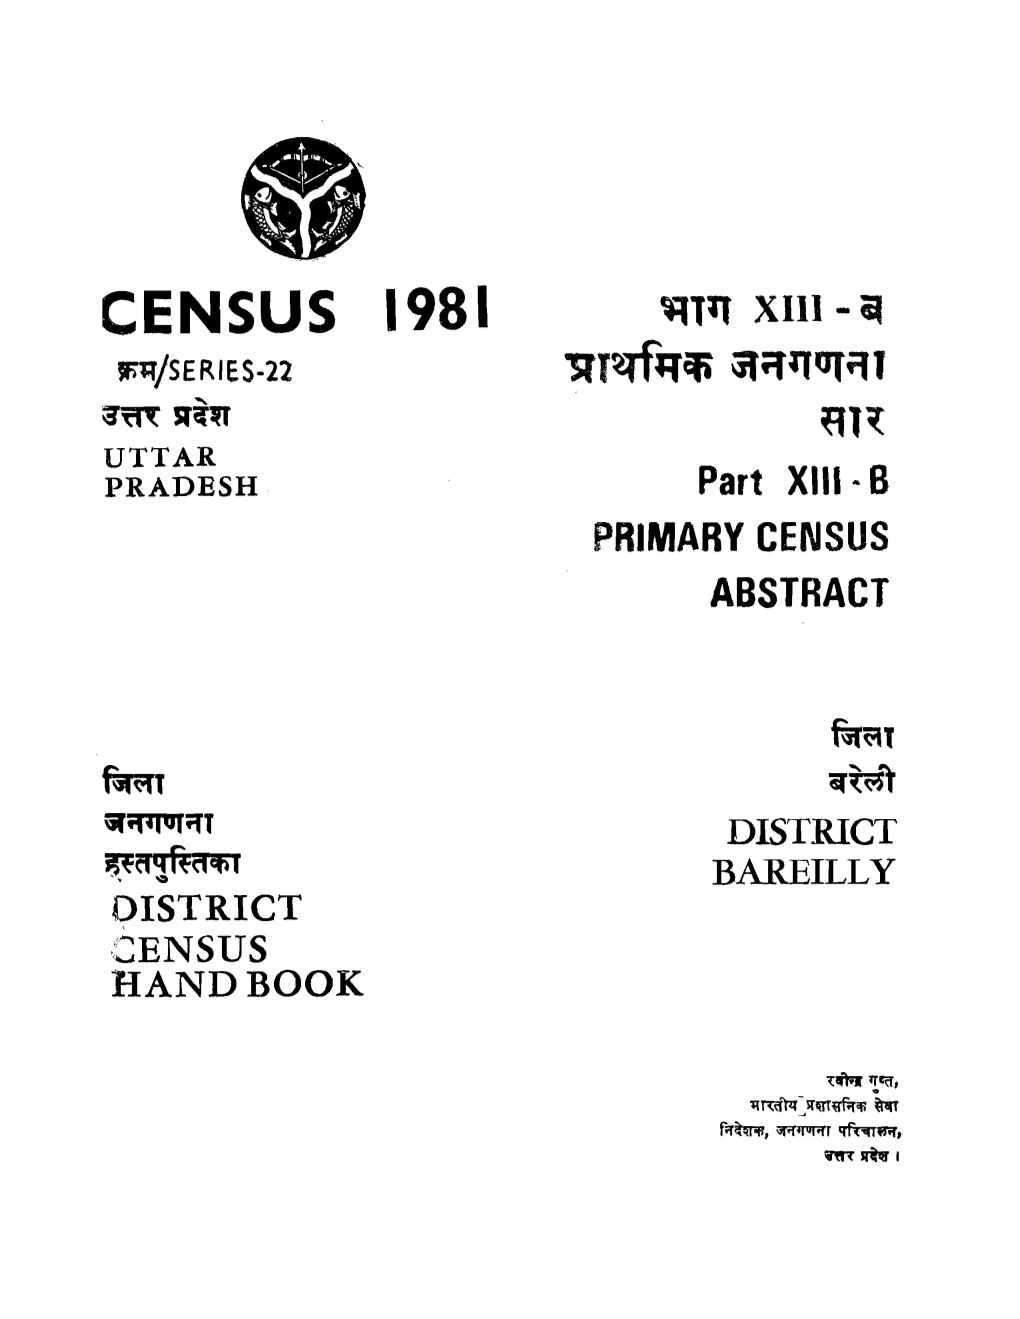 District Census Handbook, Azamgarh, Part XIII-A, Series-22